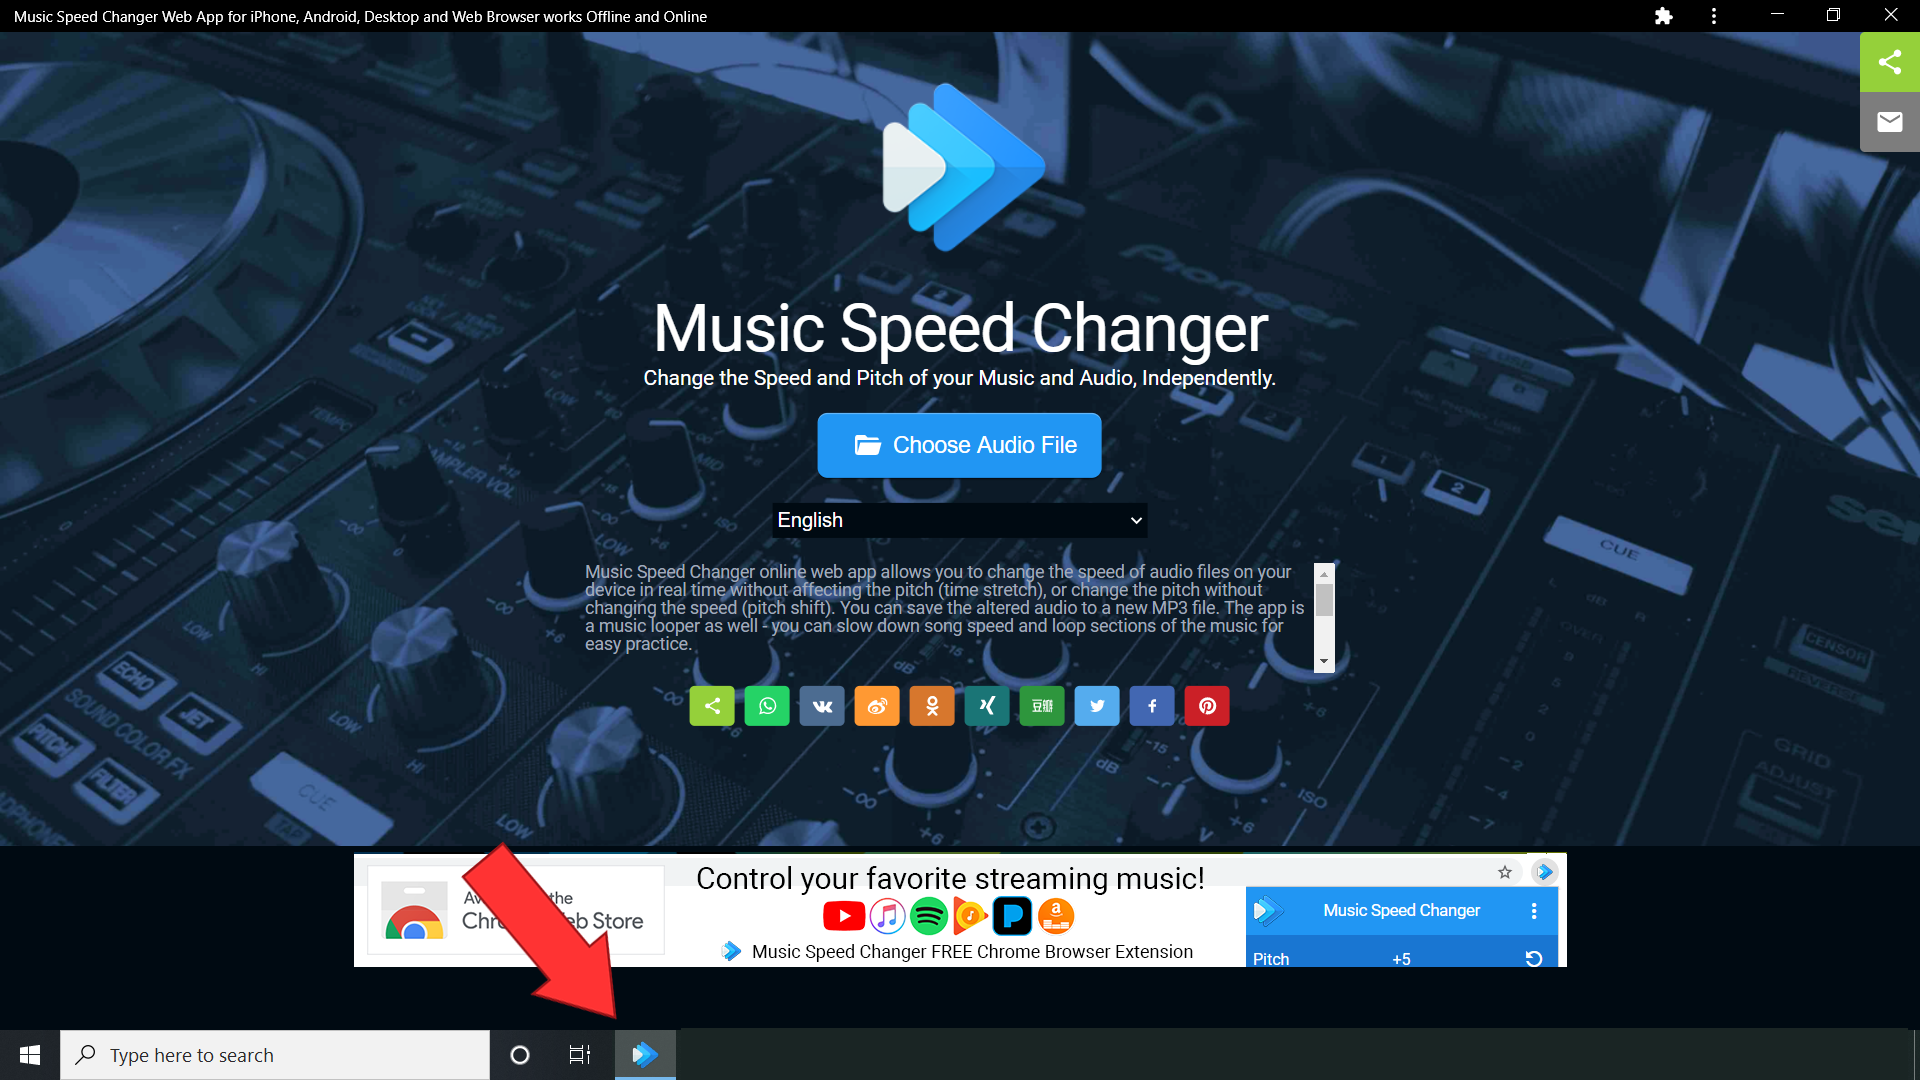 Music Speed Changer PC Application running